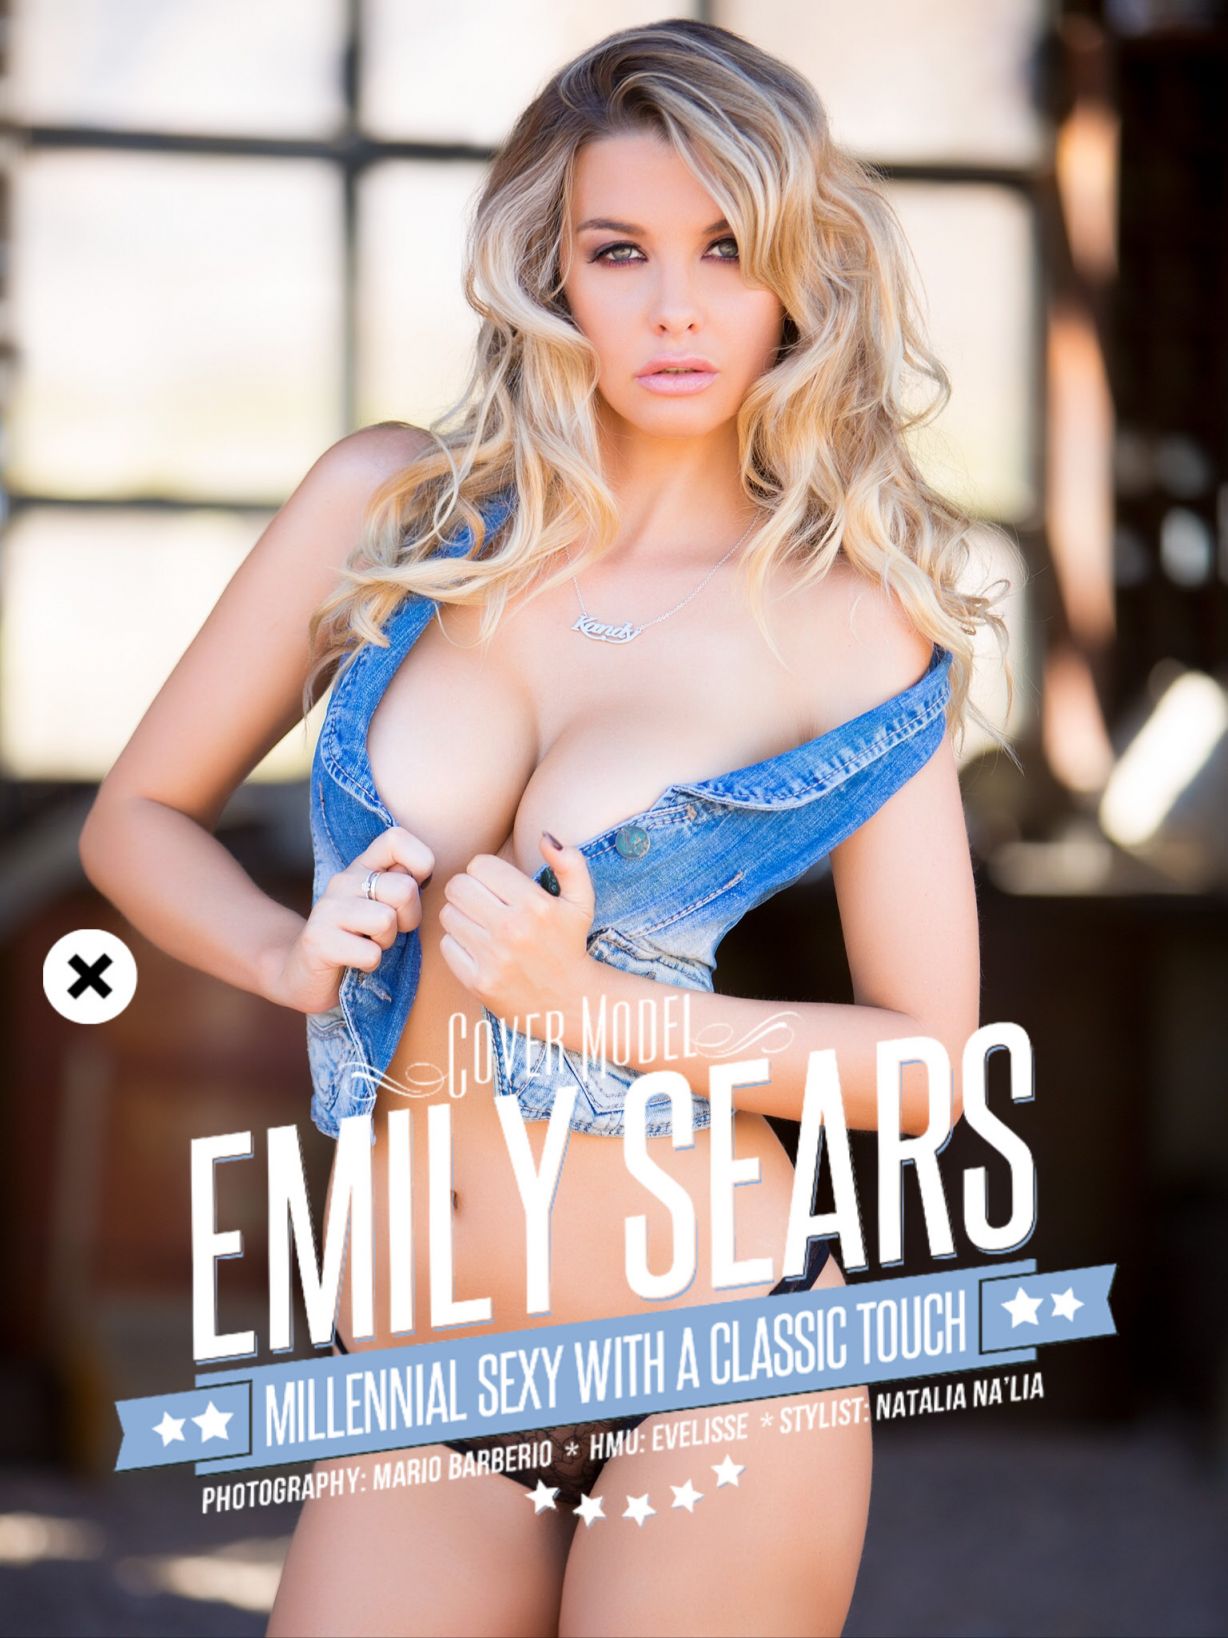 Emily Sears for Kandy Magazine